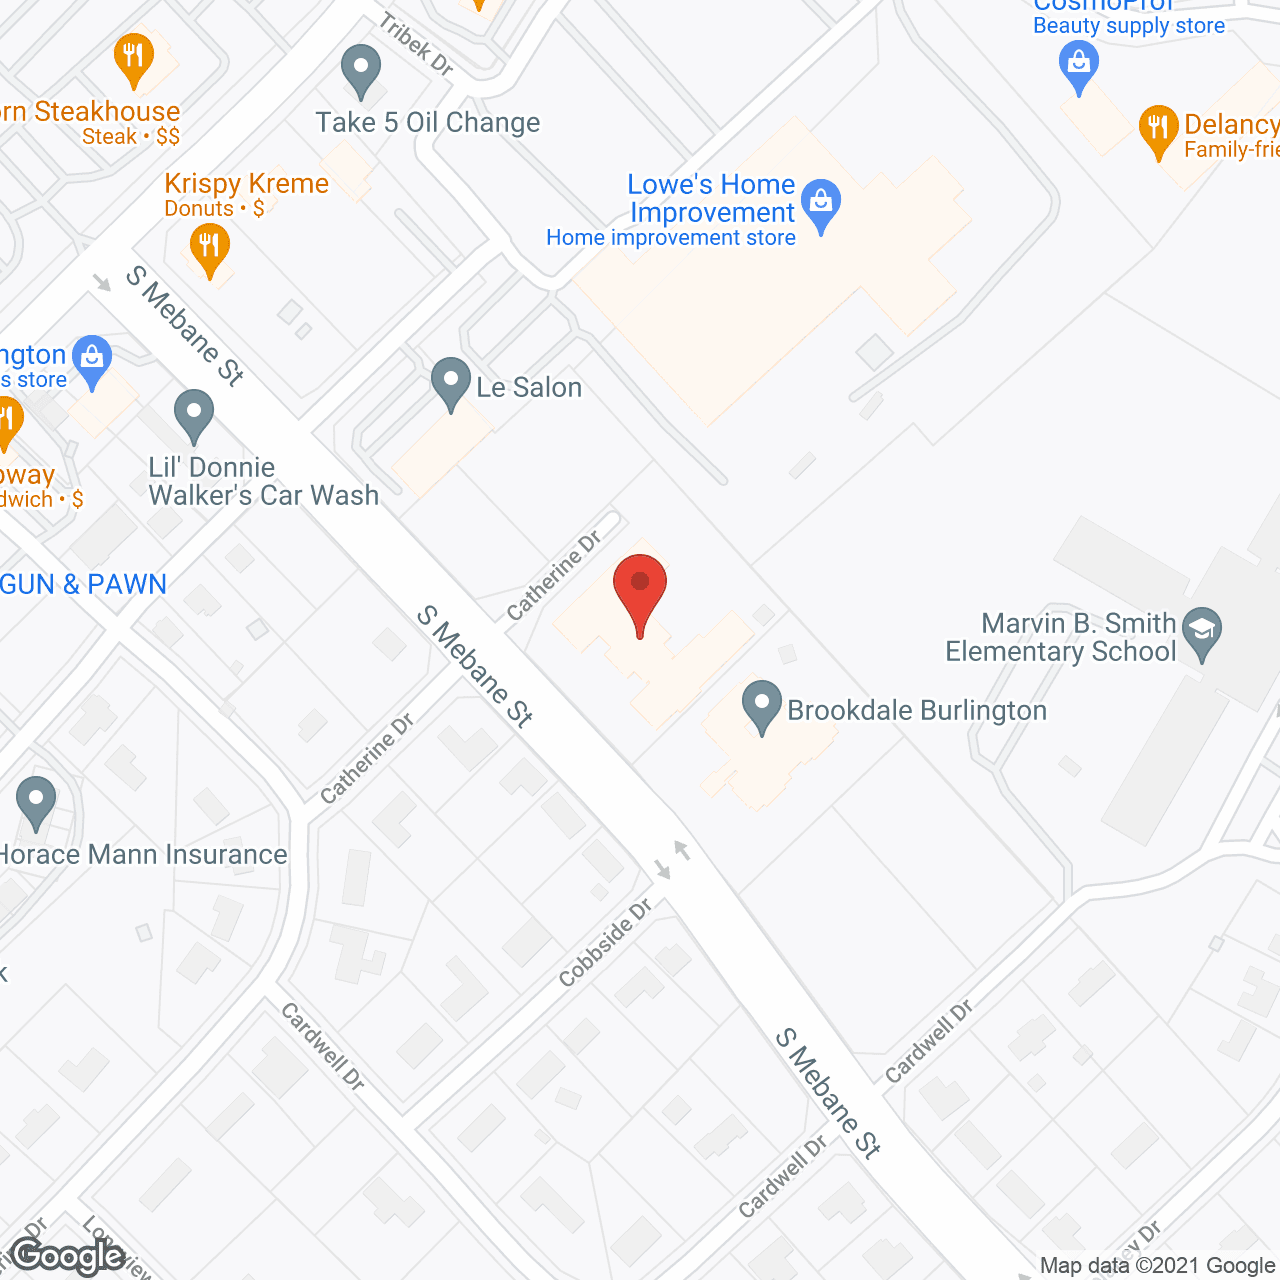 Brookdale Burlington in google map